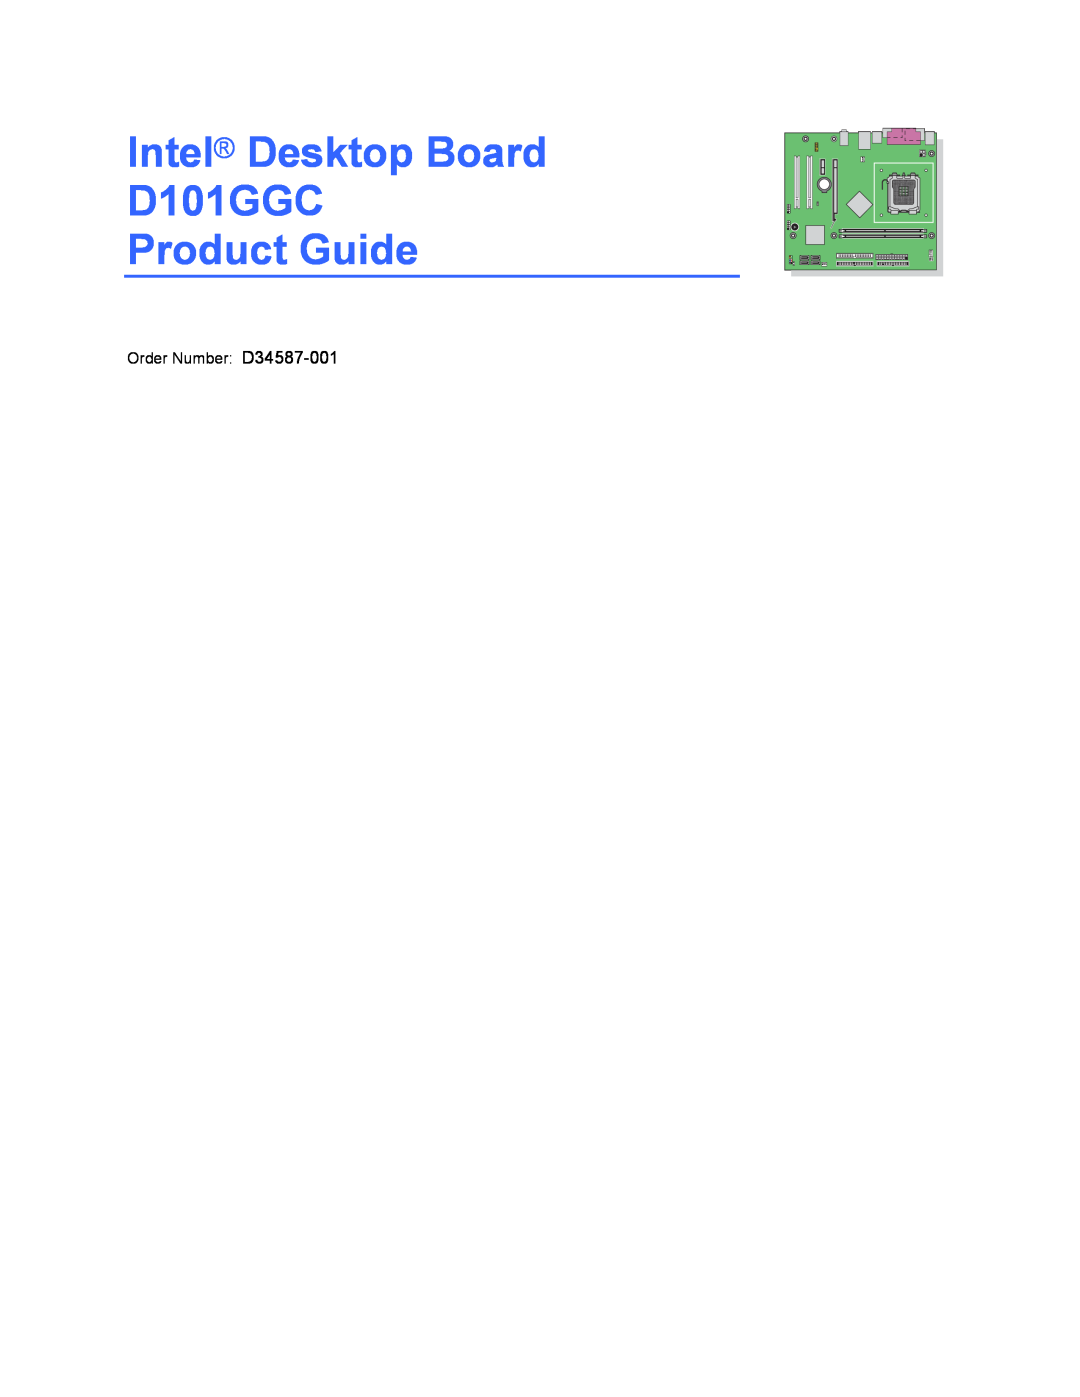 Intel manual Intel Desktop Board D101GGC Product Guide, Order Number: D34587-001 